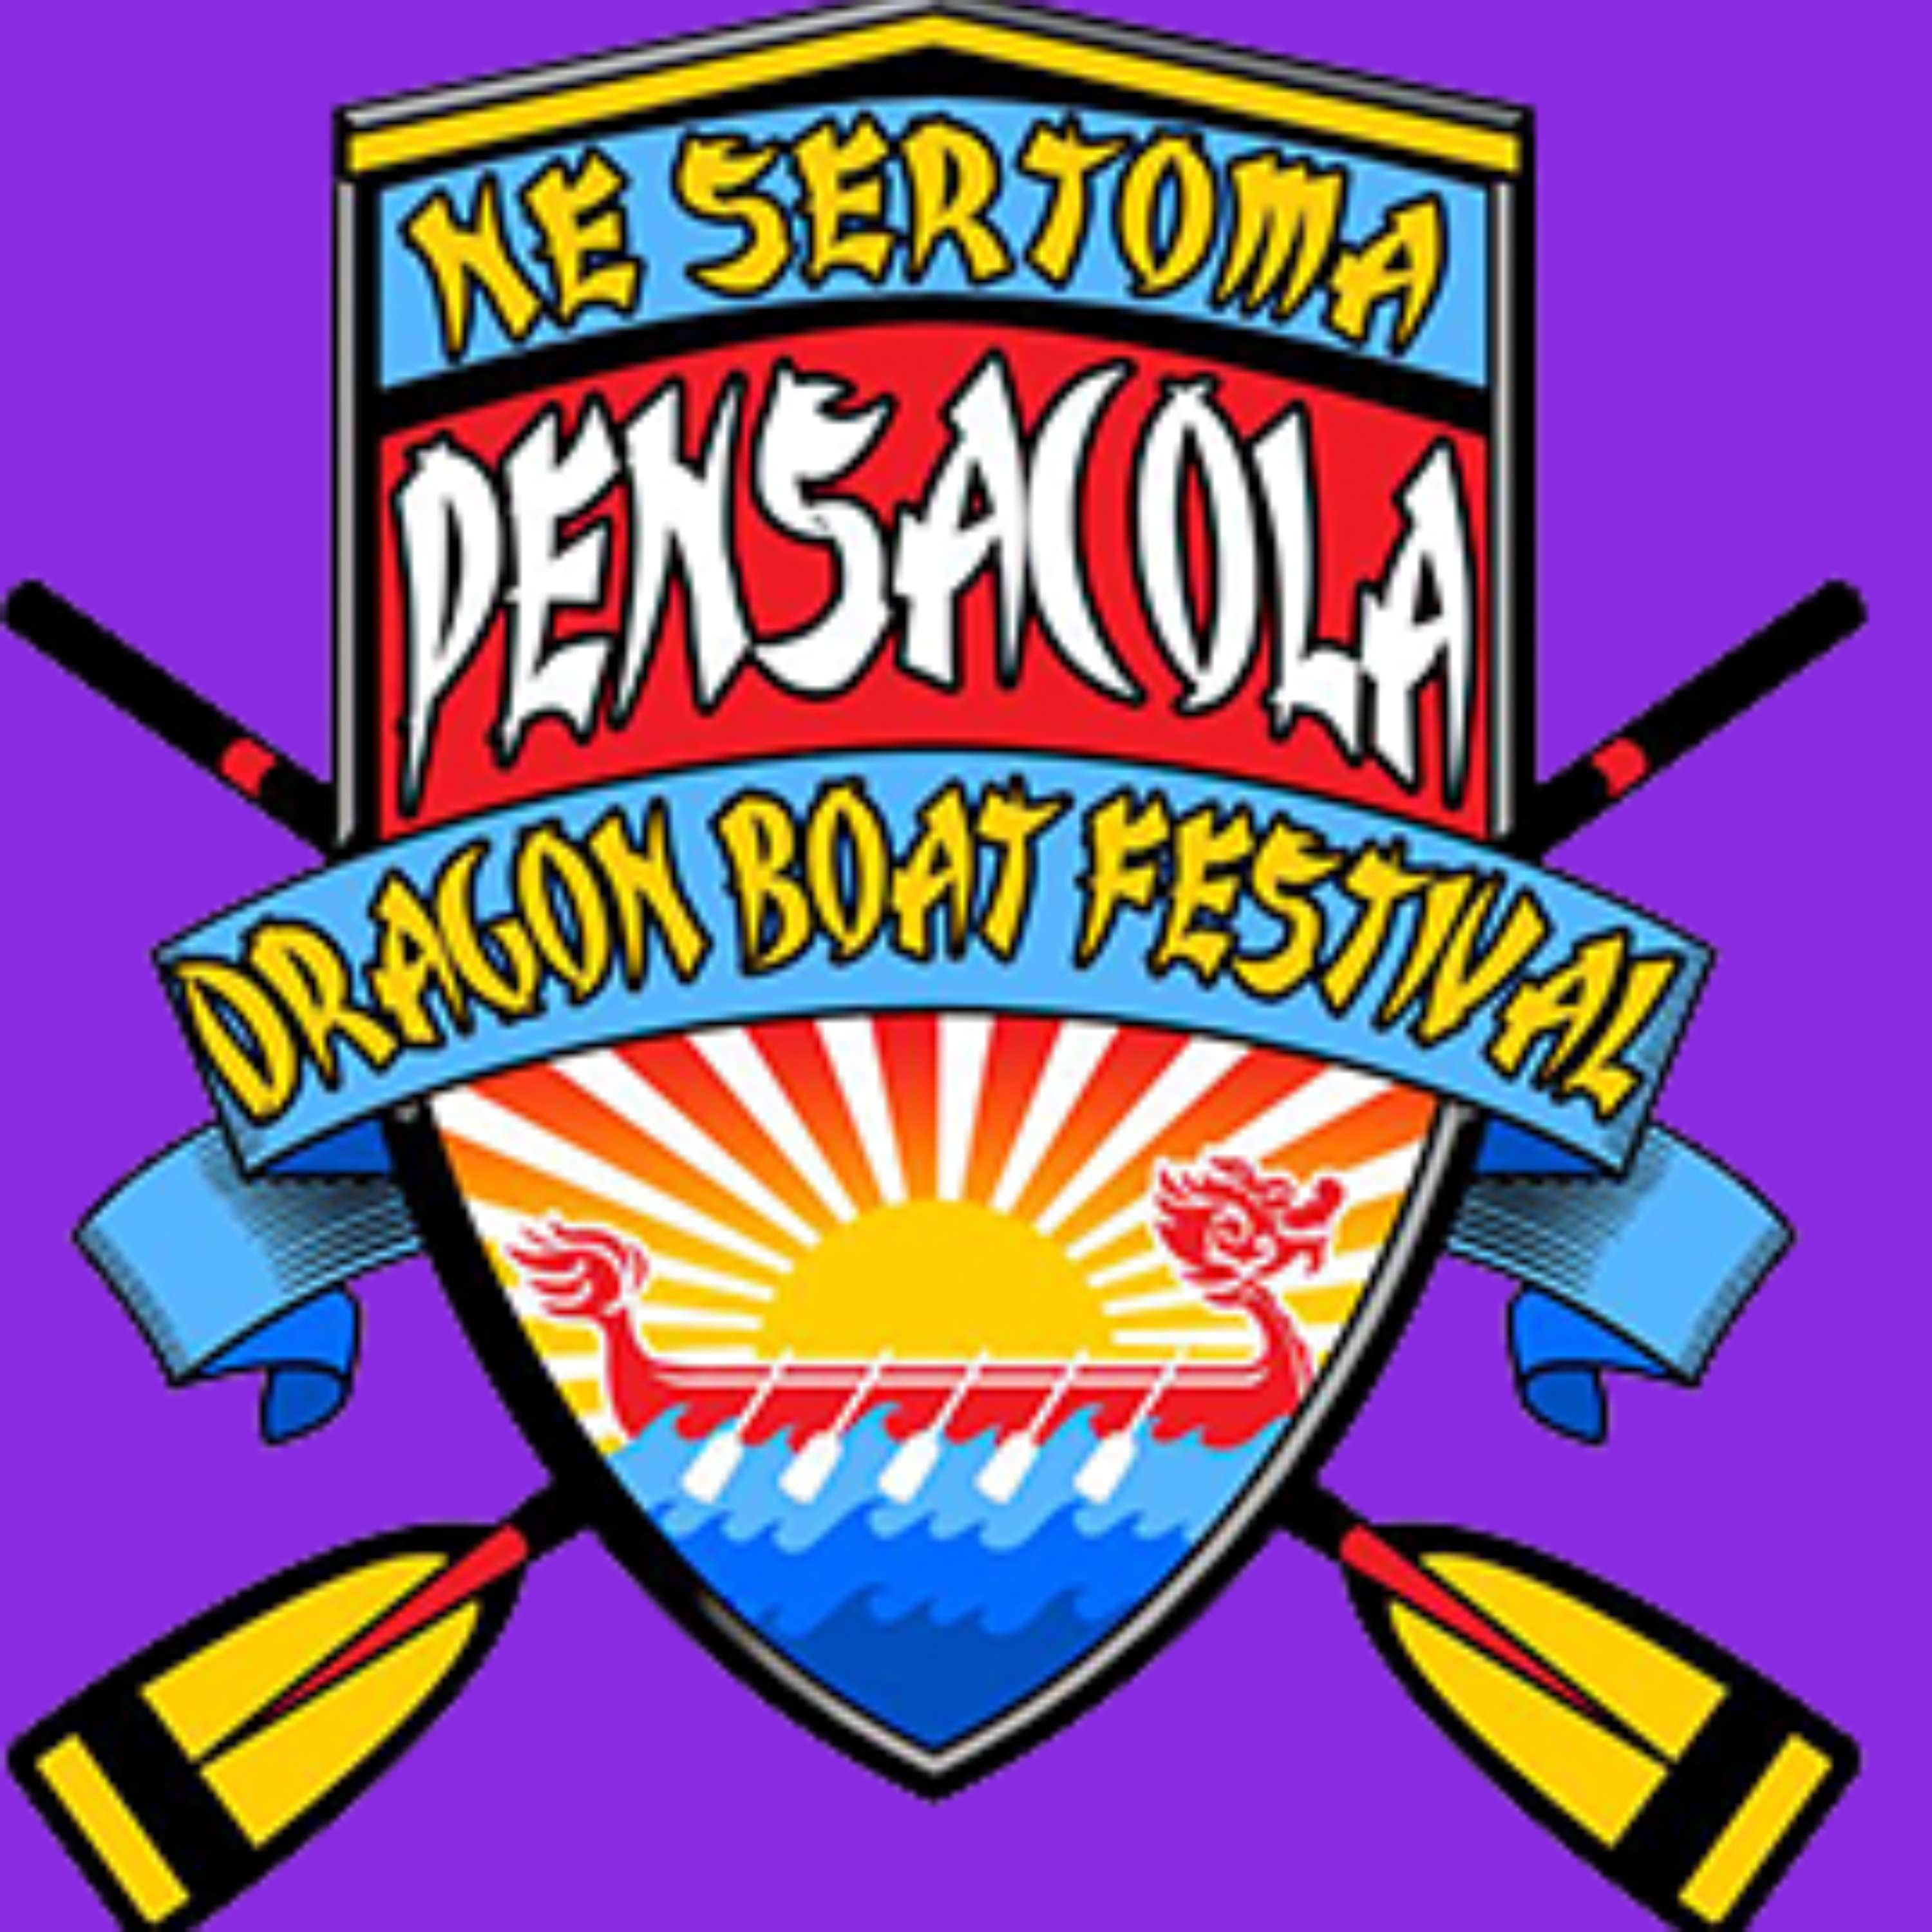 09/14/23 Northeast Pensacola Sertoma's Dragon Boat Festival happens September 30th